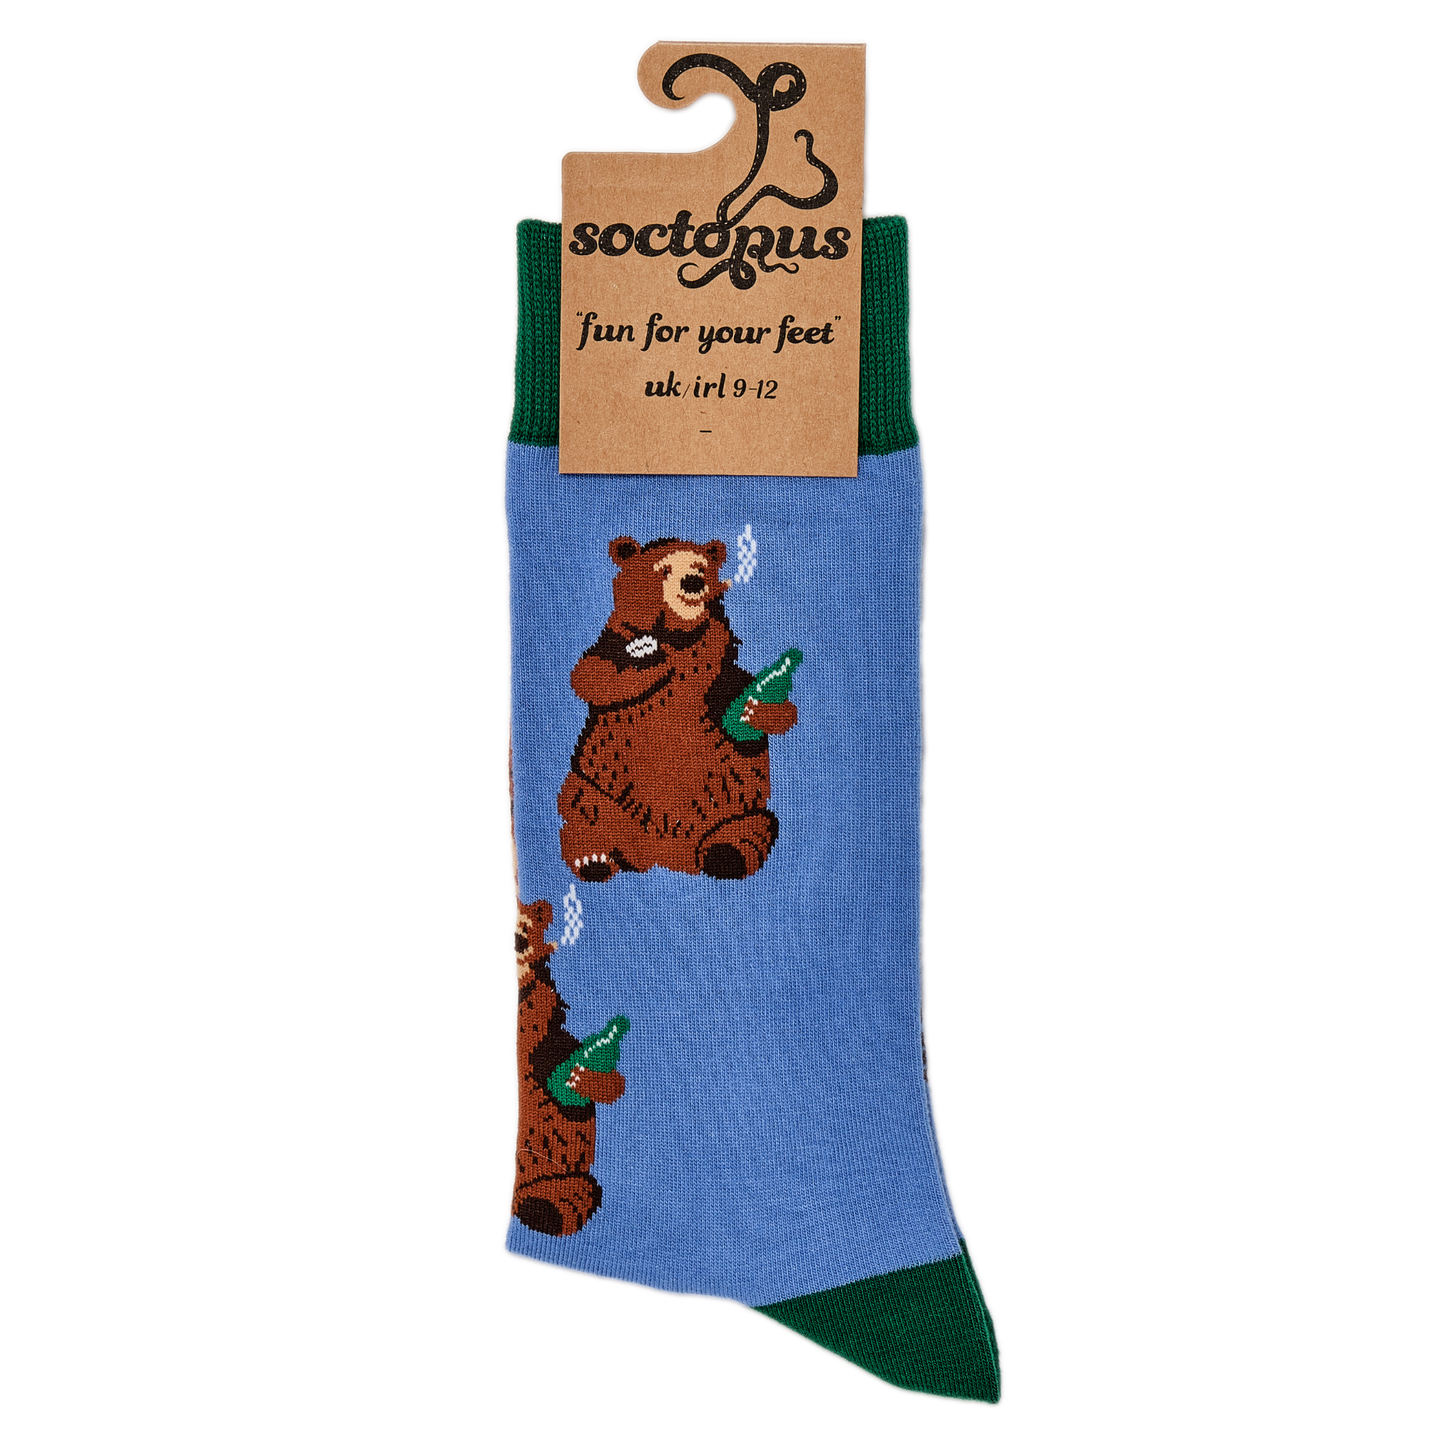 Grizzly Bear Socks